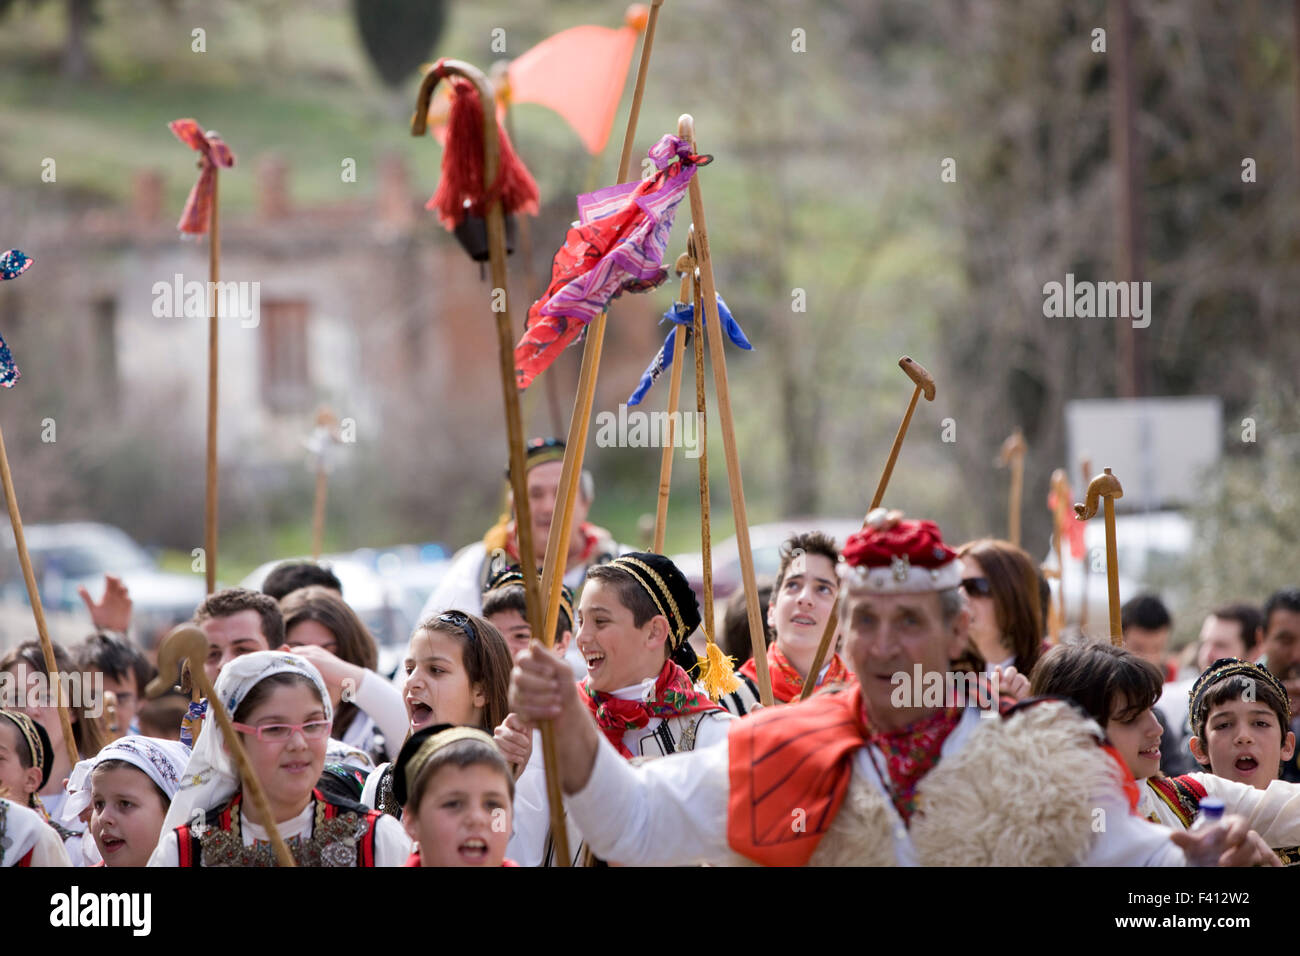 A sham leads Greek vlach wedding dancers team who bawl on their way to the shepherd's shack, raising their rods. Thivai, Greece Stock Photo